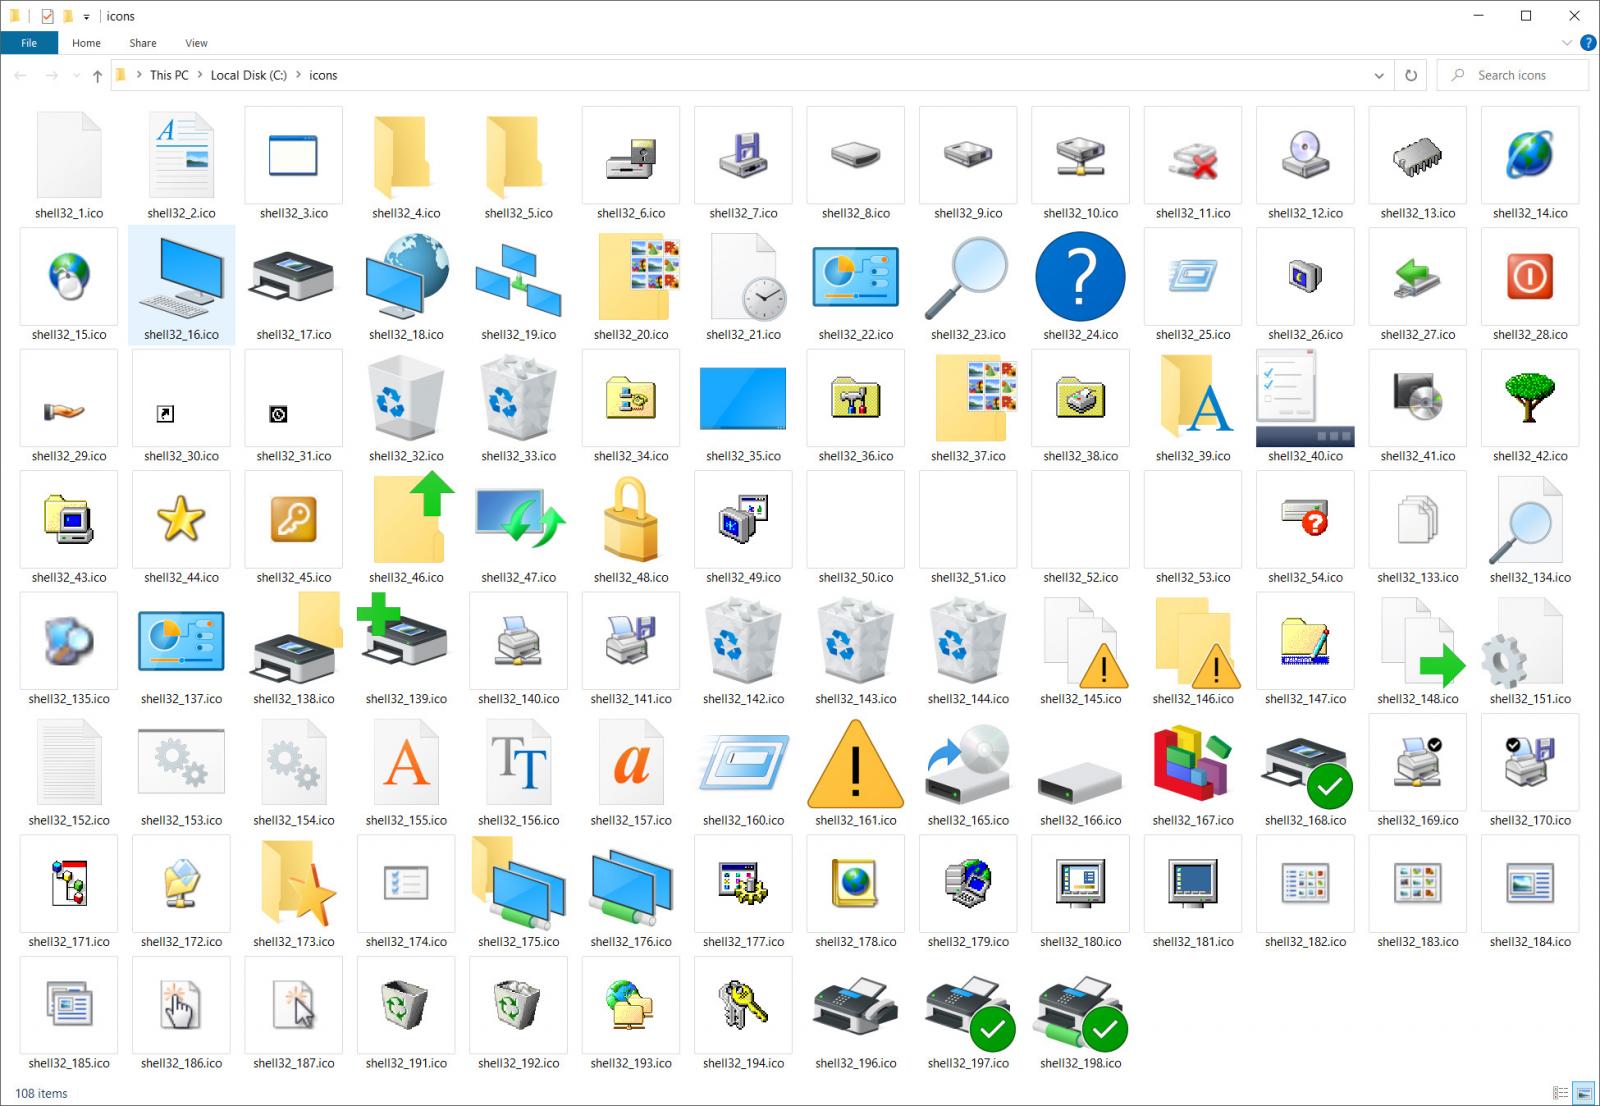 Windows 10 Sun Valley update kicks Windows 95's icons to the curb